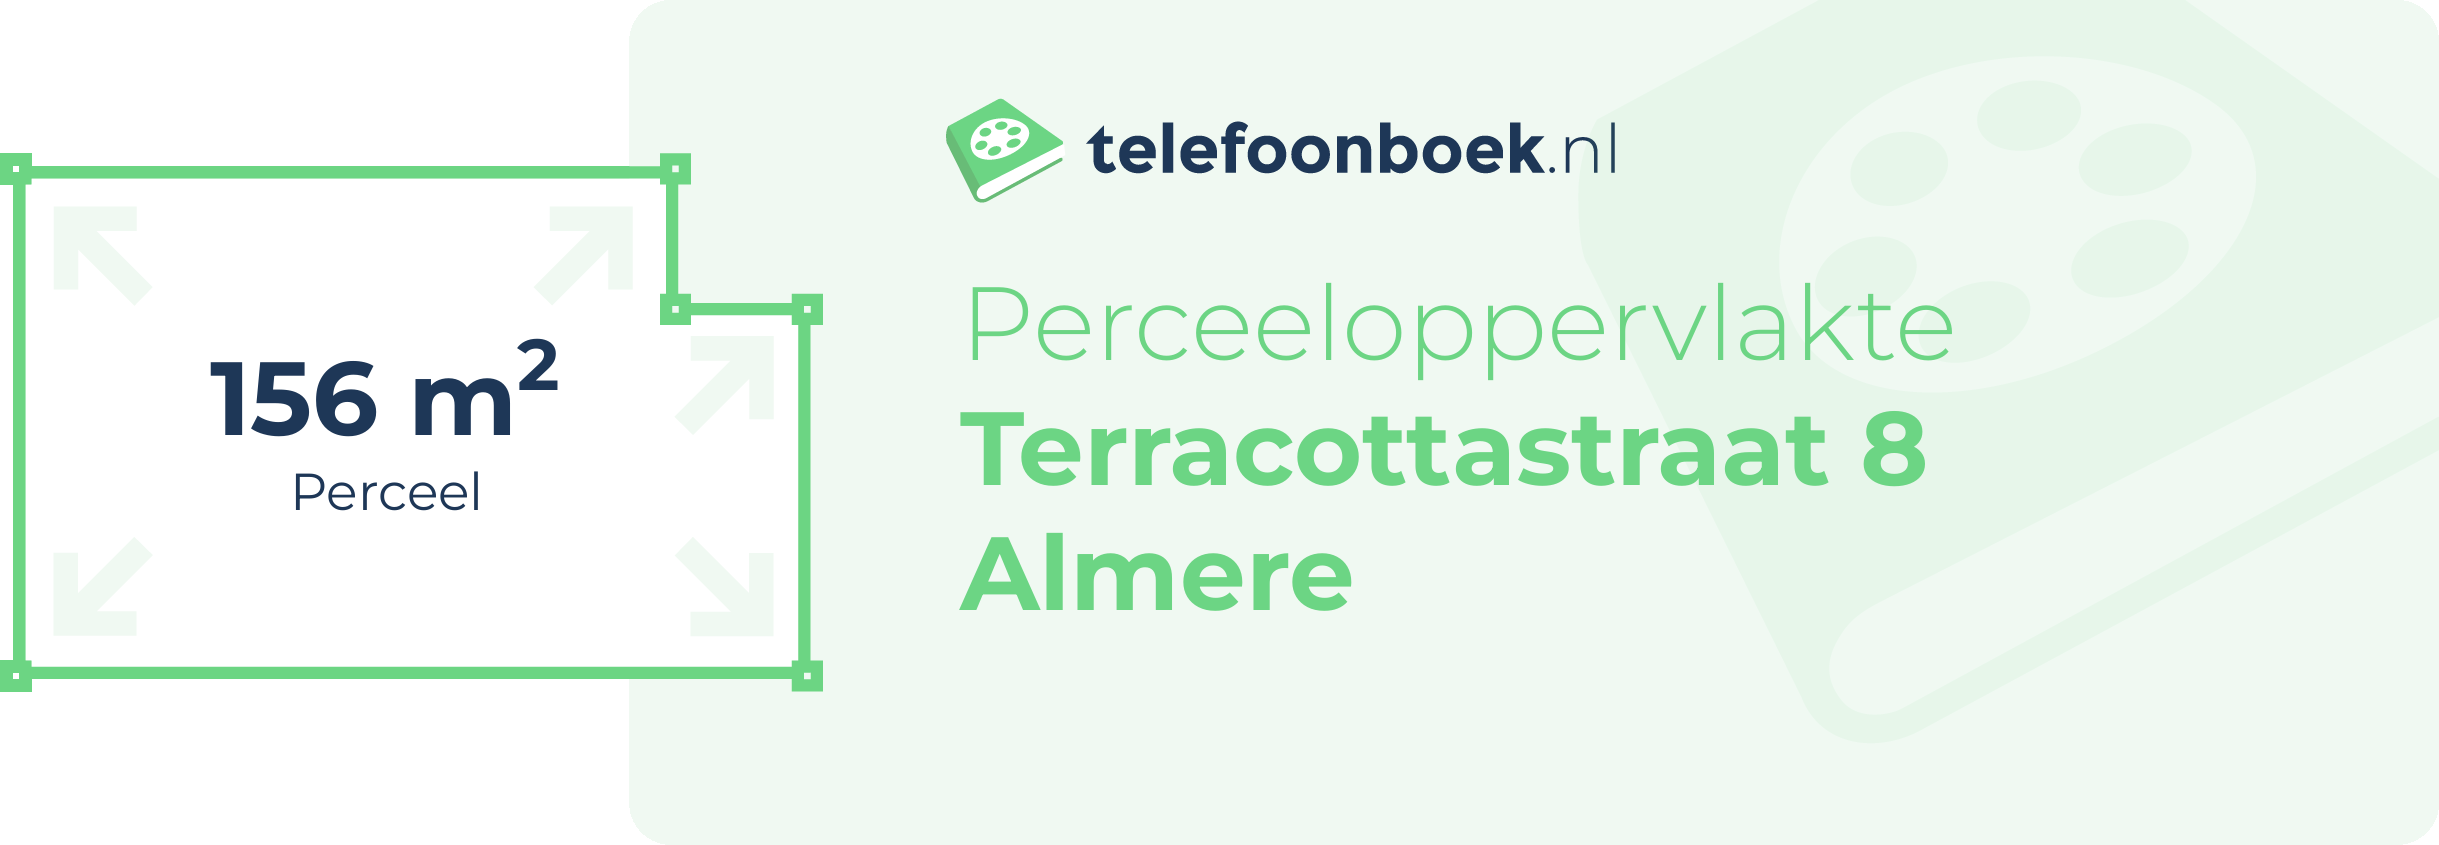 Perceeloppervlakte Terracottastraat 8 Almere